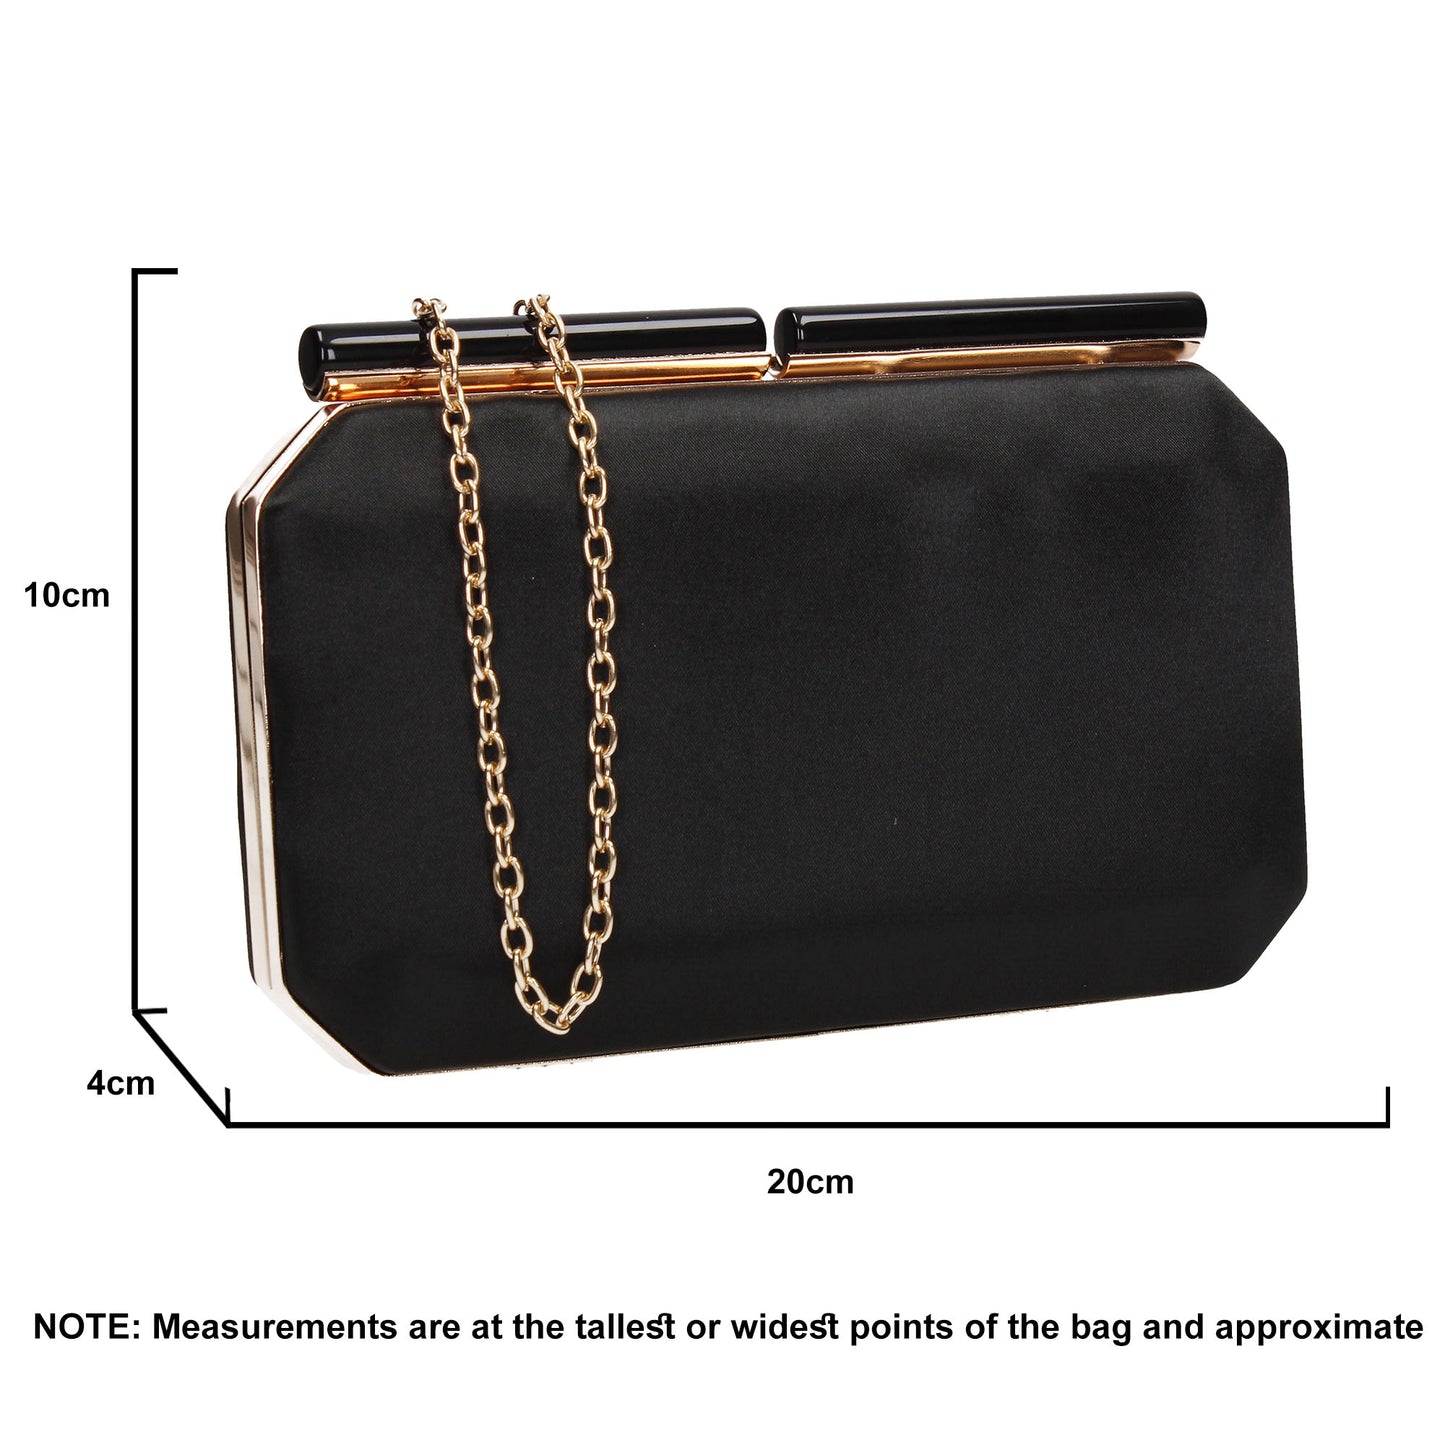 SWANKYSWANS Millie Clutch Bag Black Cute Cheap Clutch Bag For Weddings School and Work